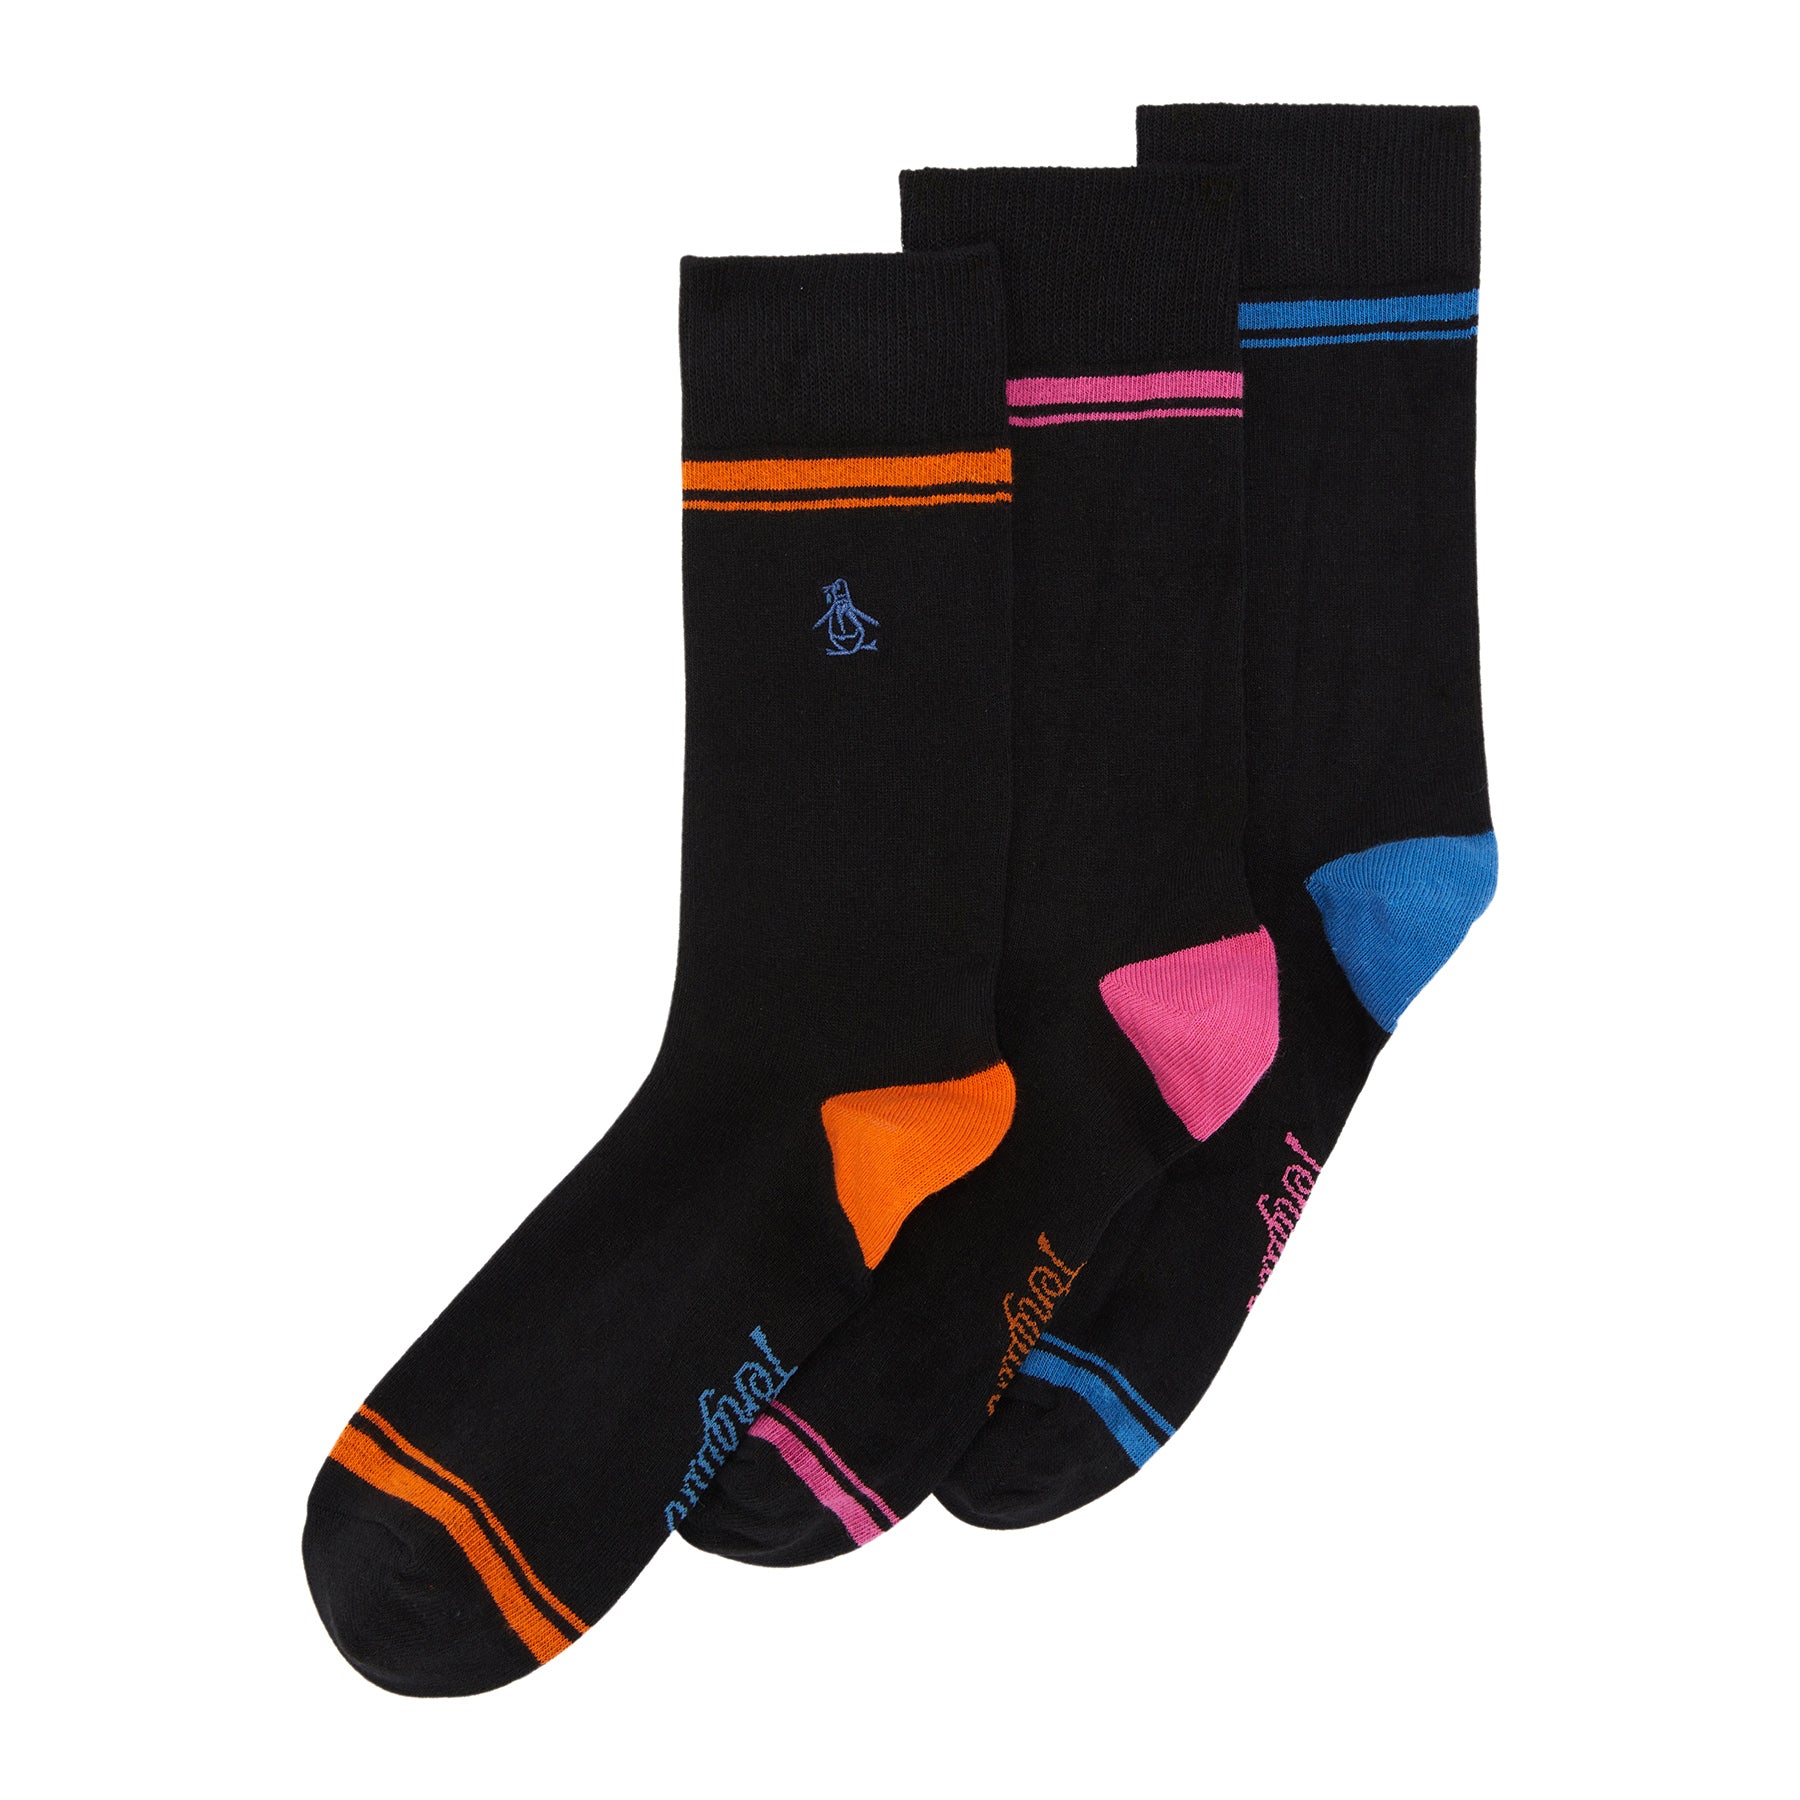 View 3 Pack Welt Stripe Multi Ankle Socks In Black information